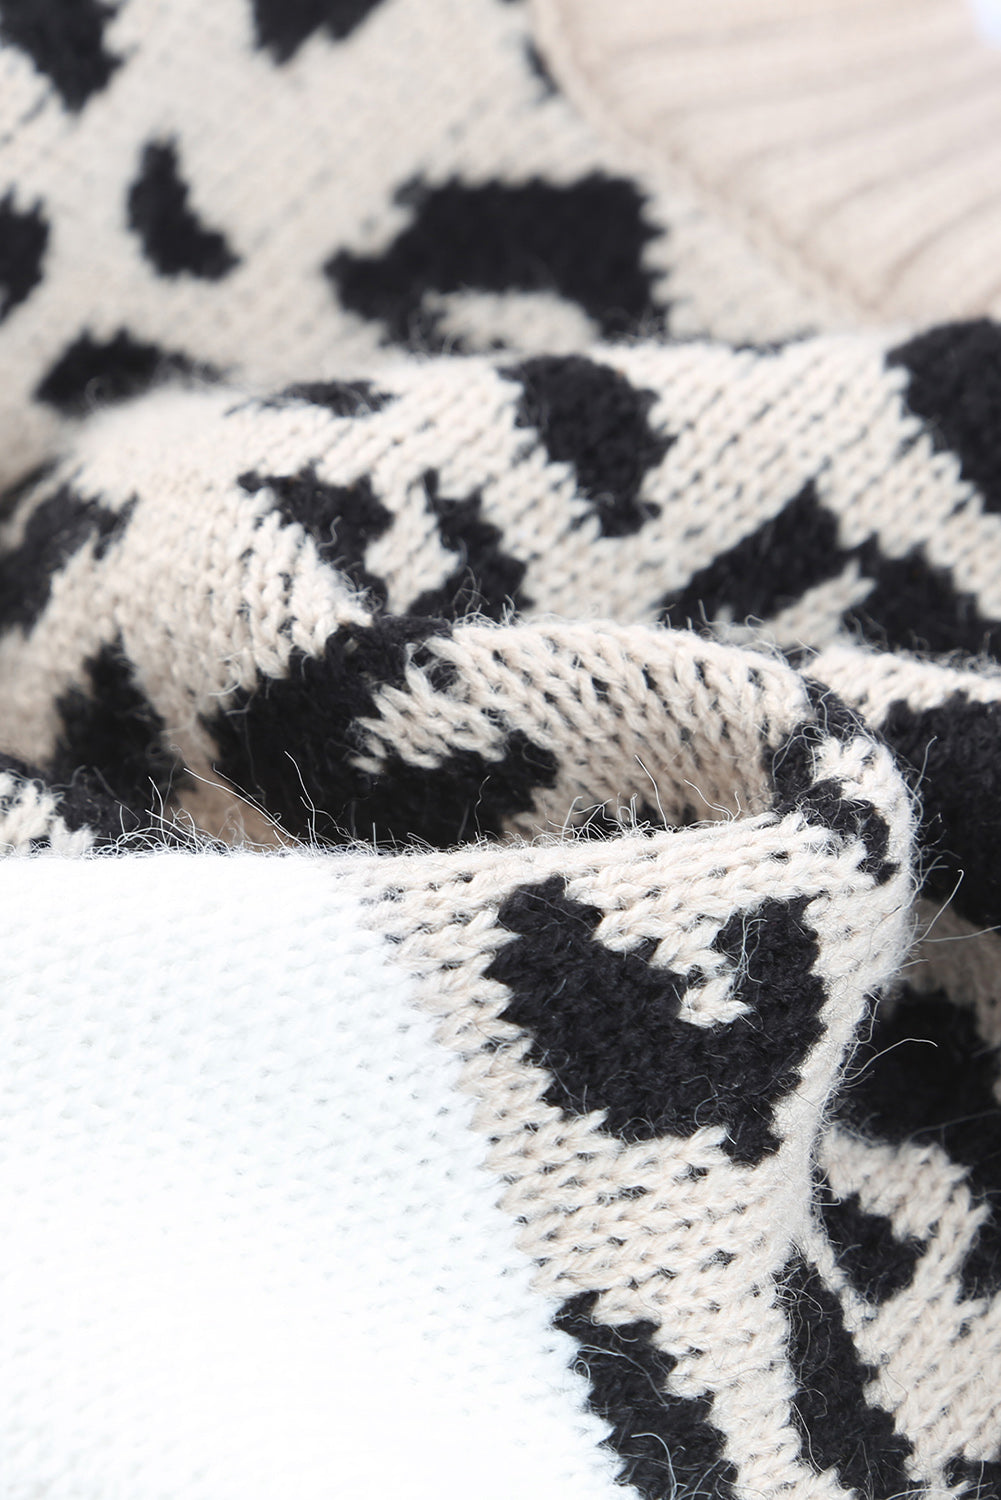 Khaki Leopard Color Block Long Sleeve Sweater Sweaters & Cardigans JT's Designer Fashion